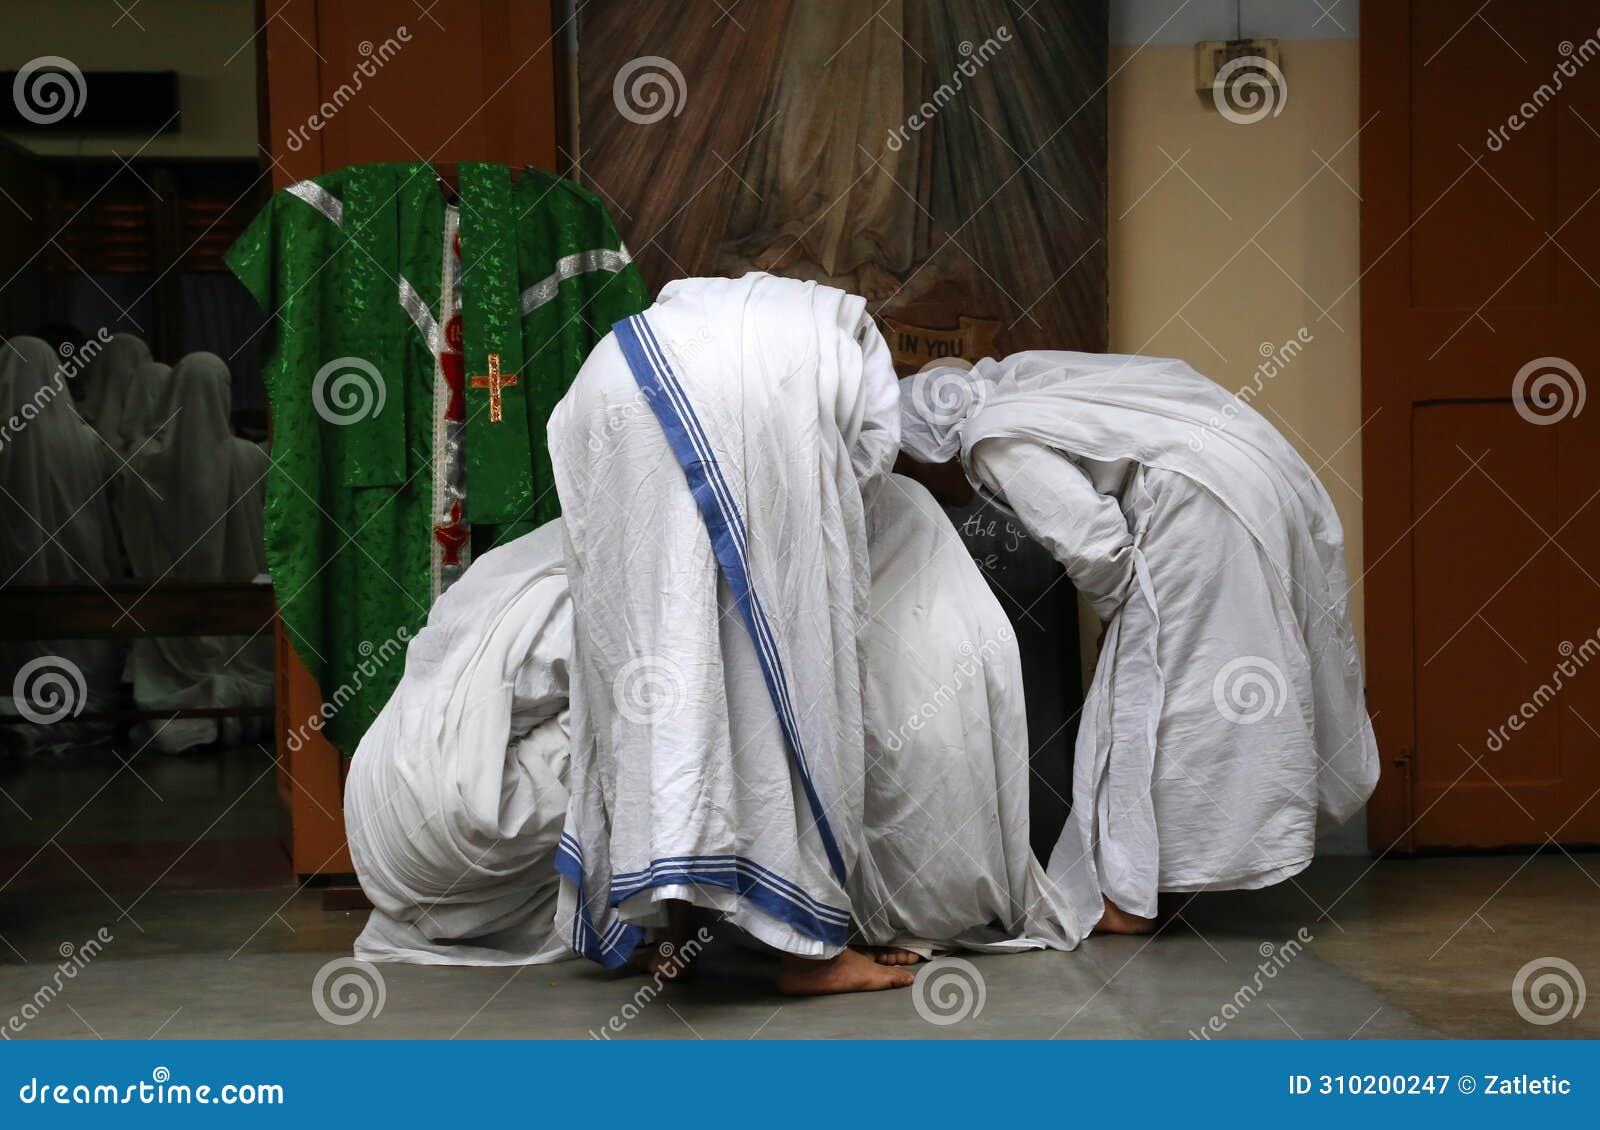 sisters of missionaries of charity preparing for prayer in motherhouse, kolkata